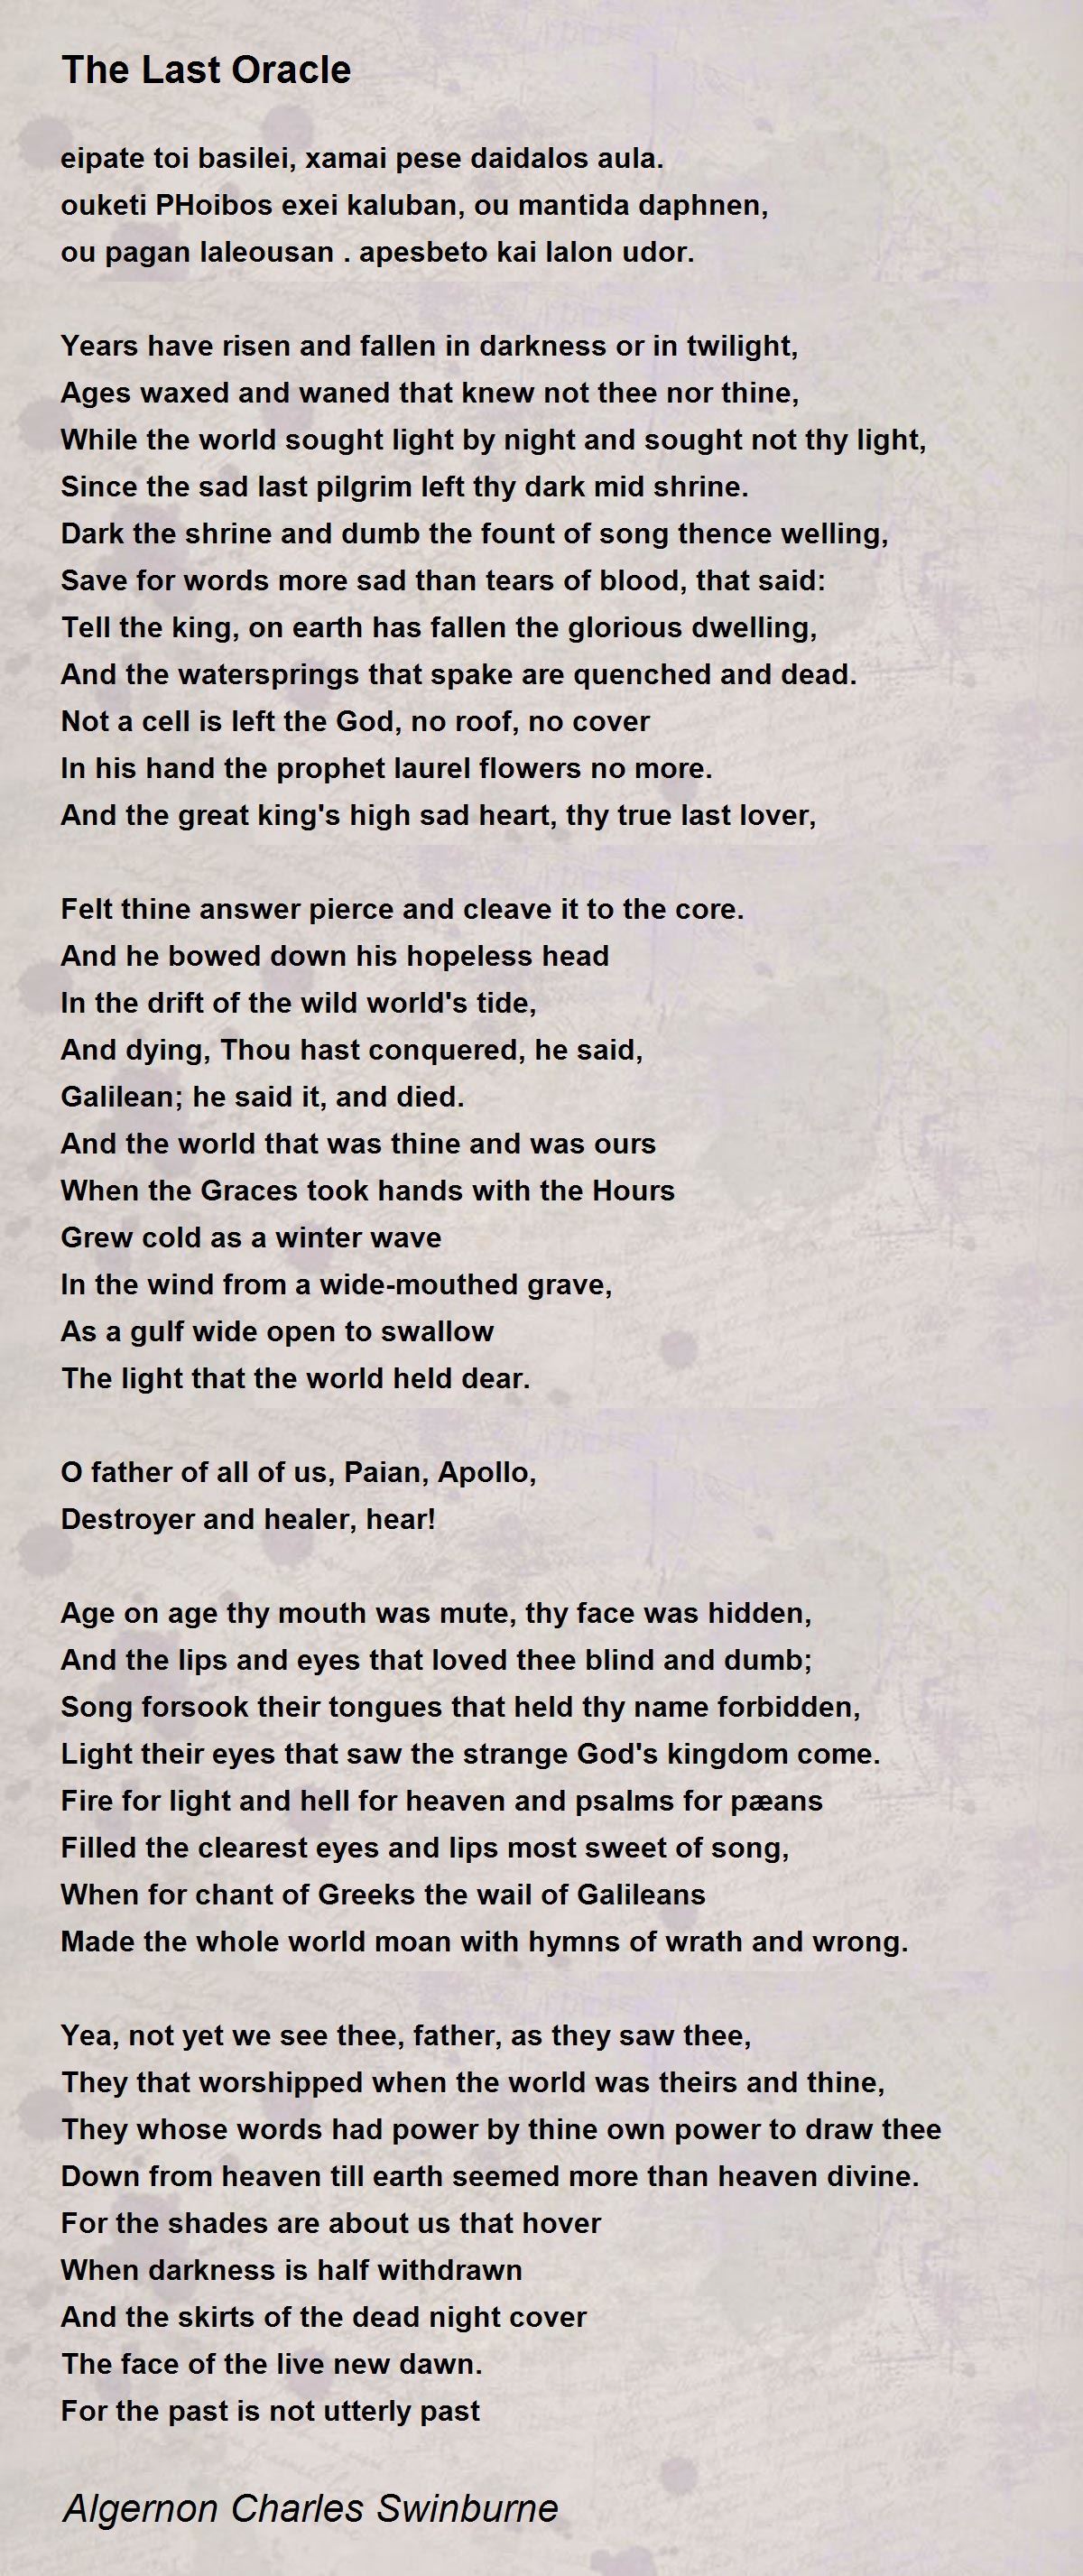 The Last Oracle - The Last Oracle Poem by Algernon Charles Swinburne